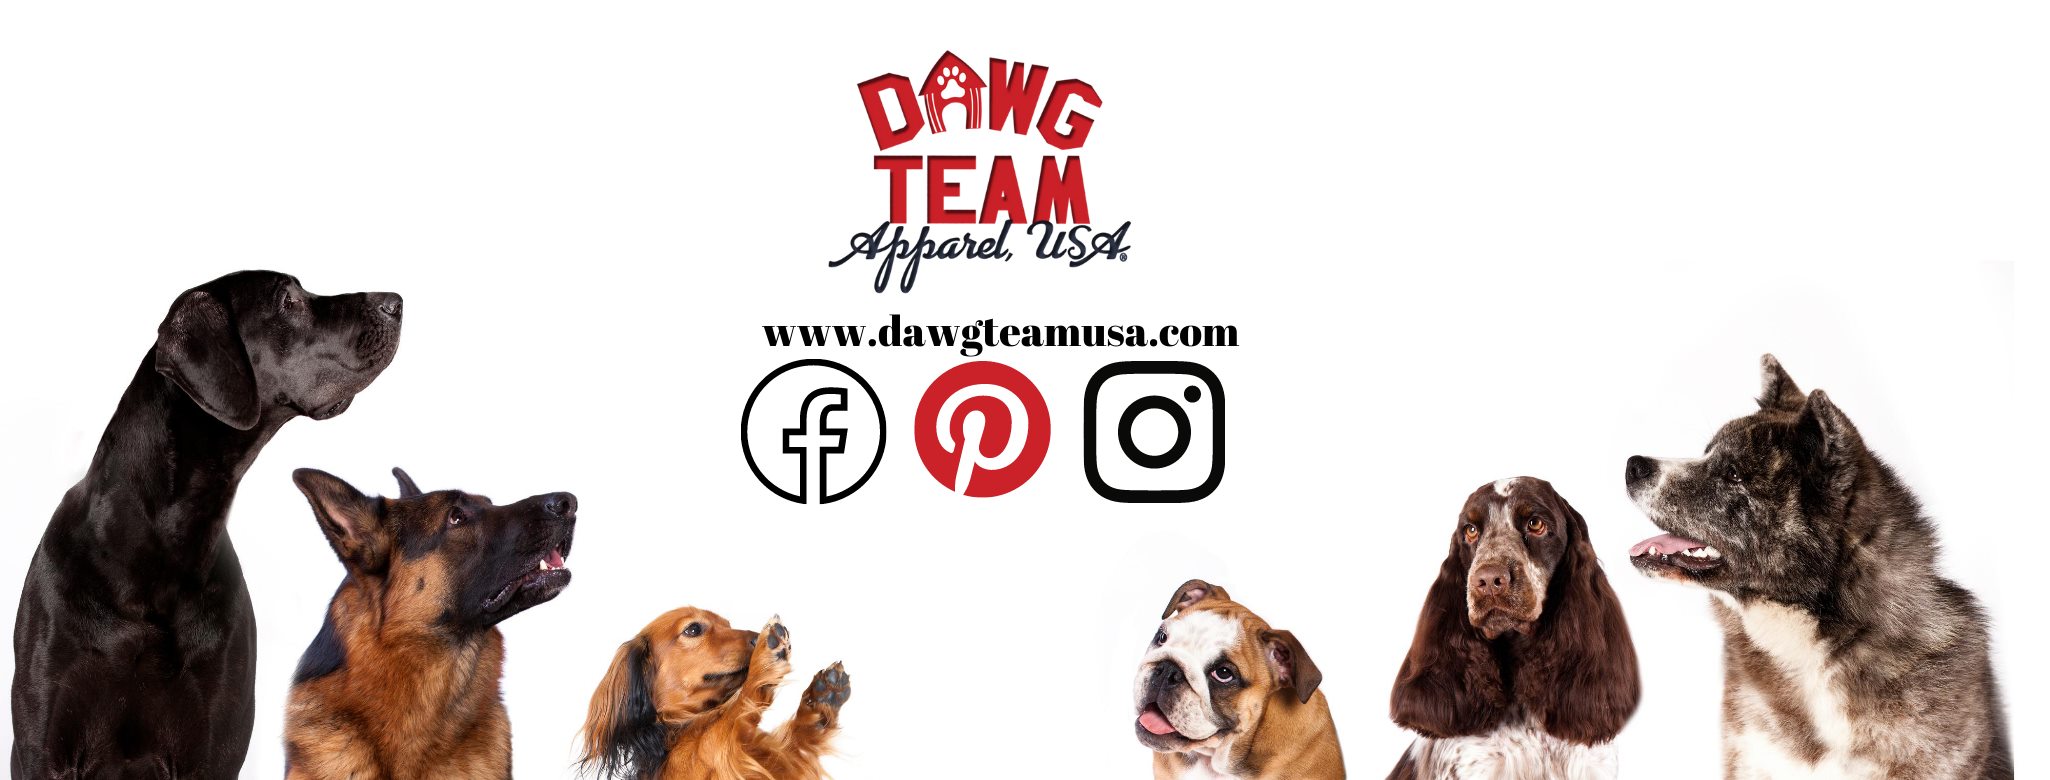 Dawg Team Apparel, USA